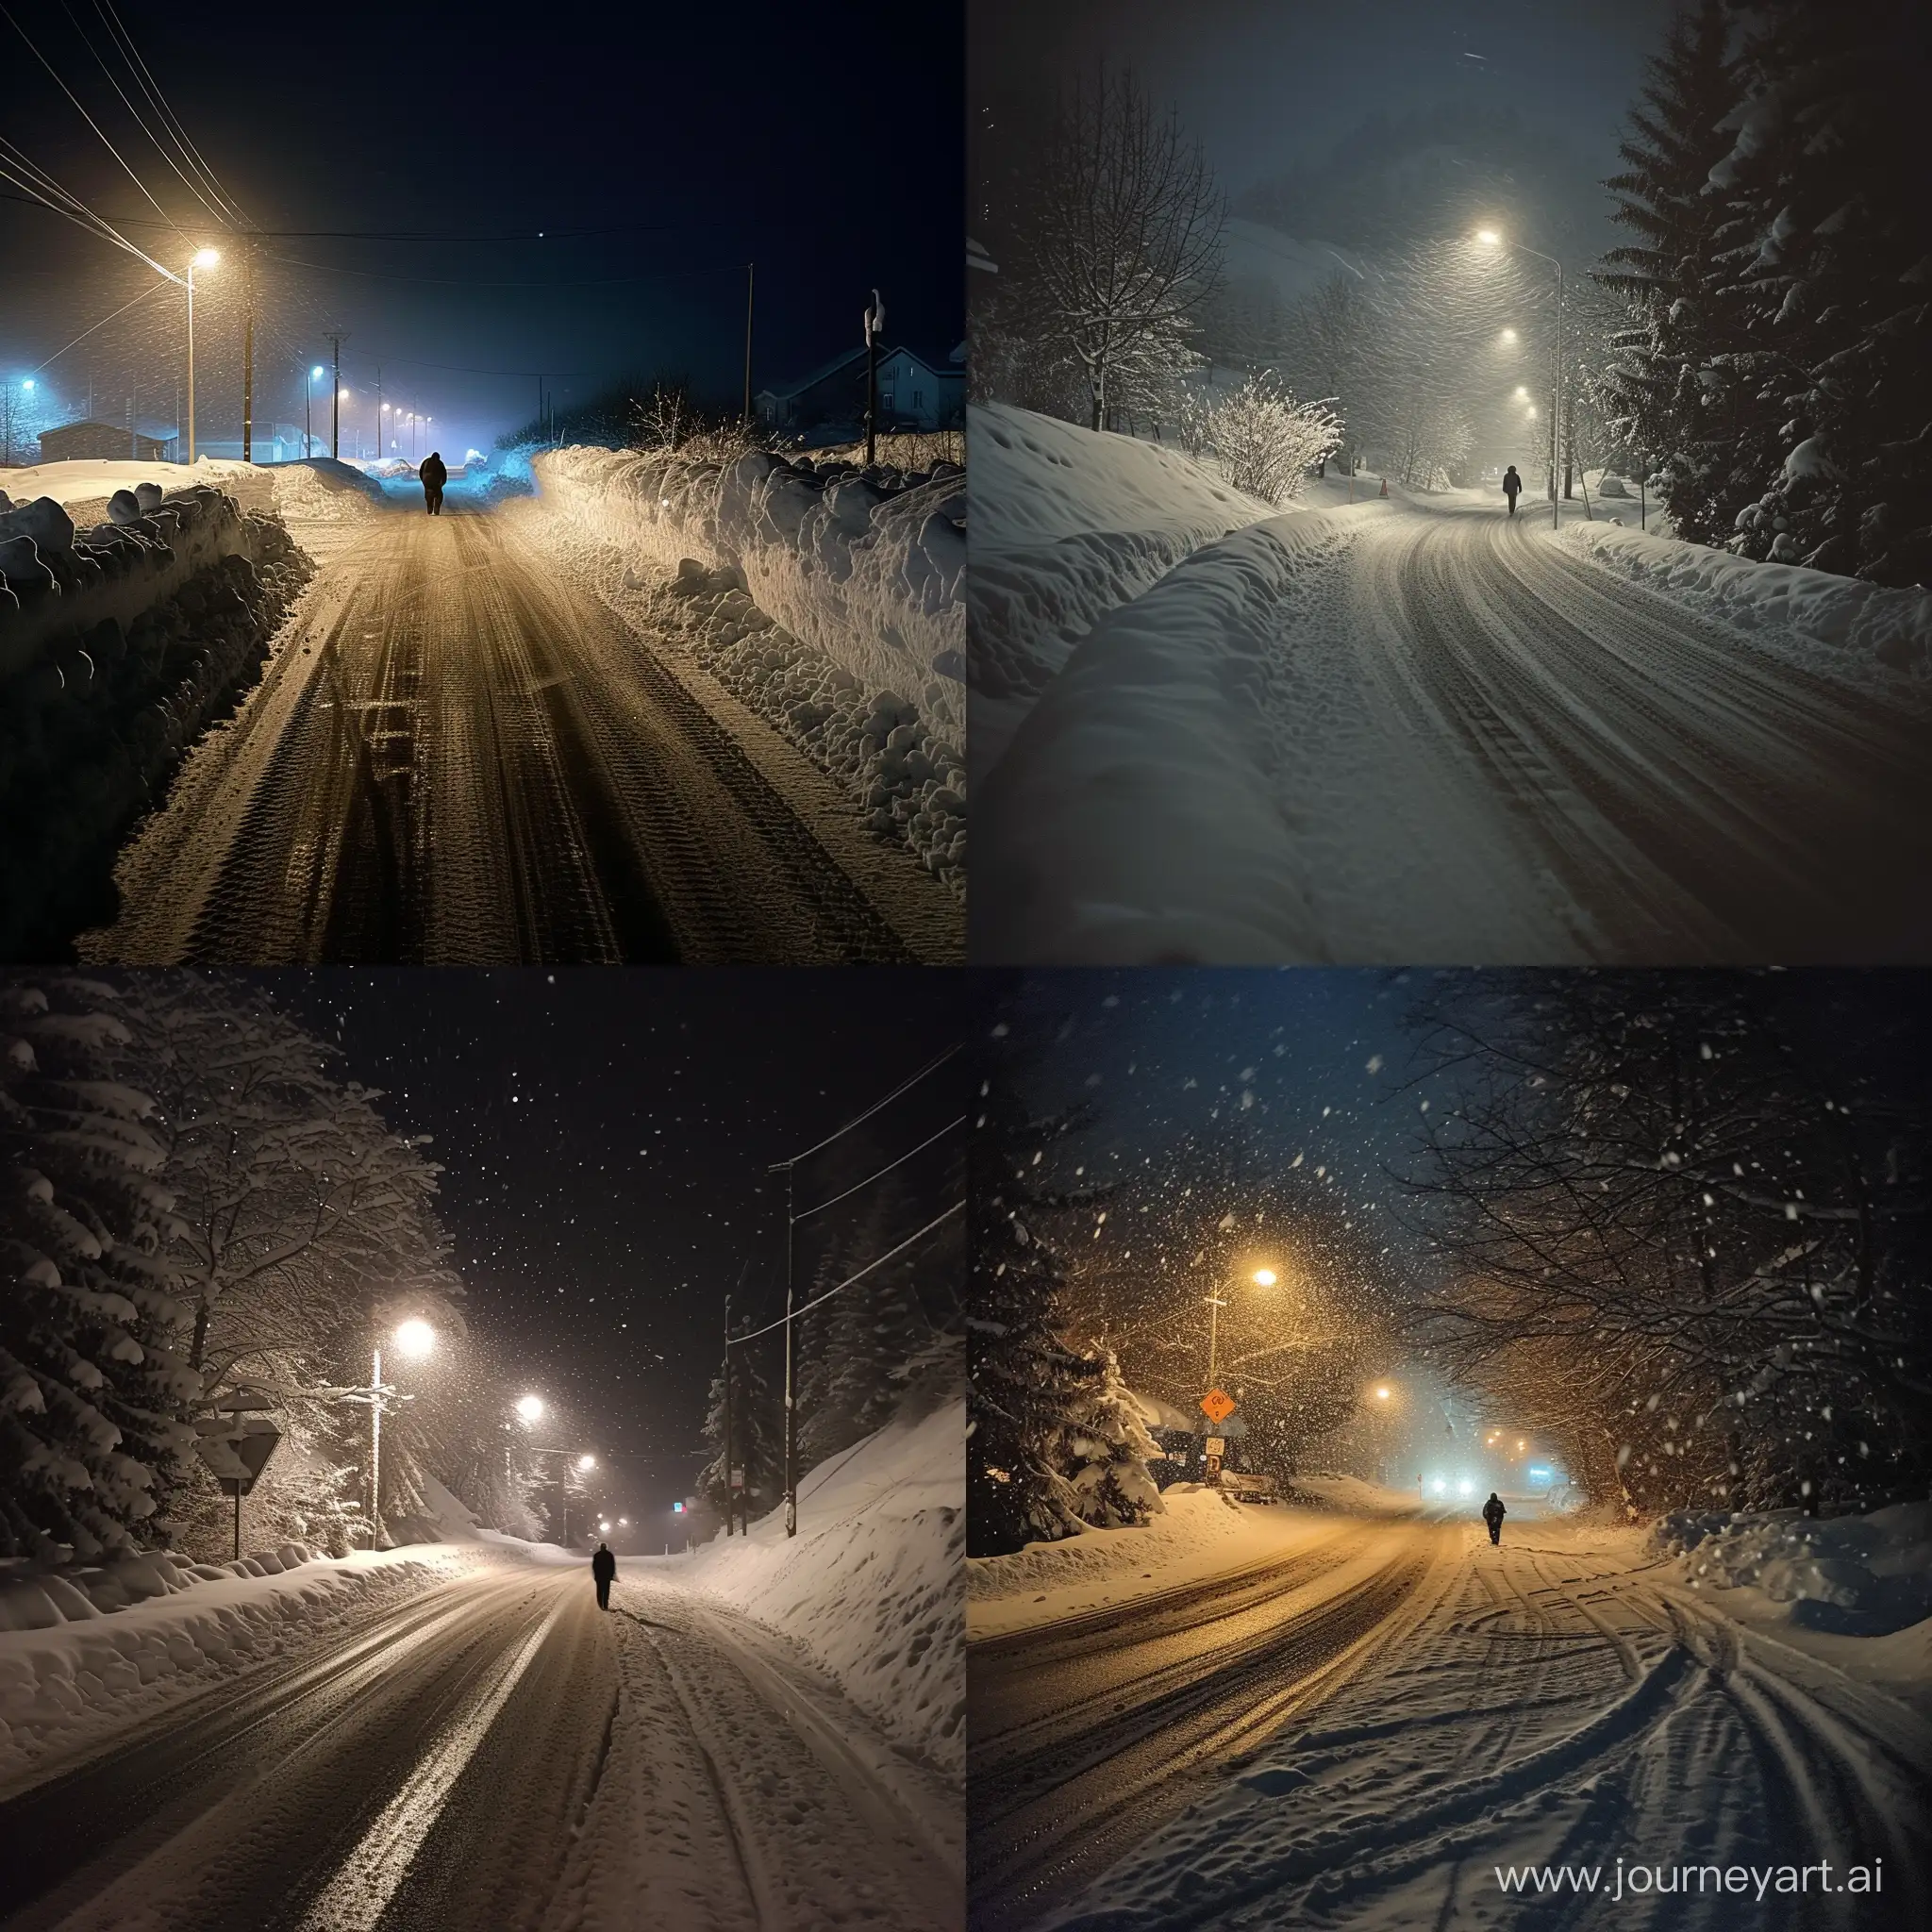 Solitary-Night-Walker-on-Snowy-Road